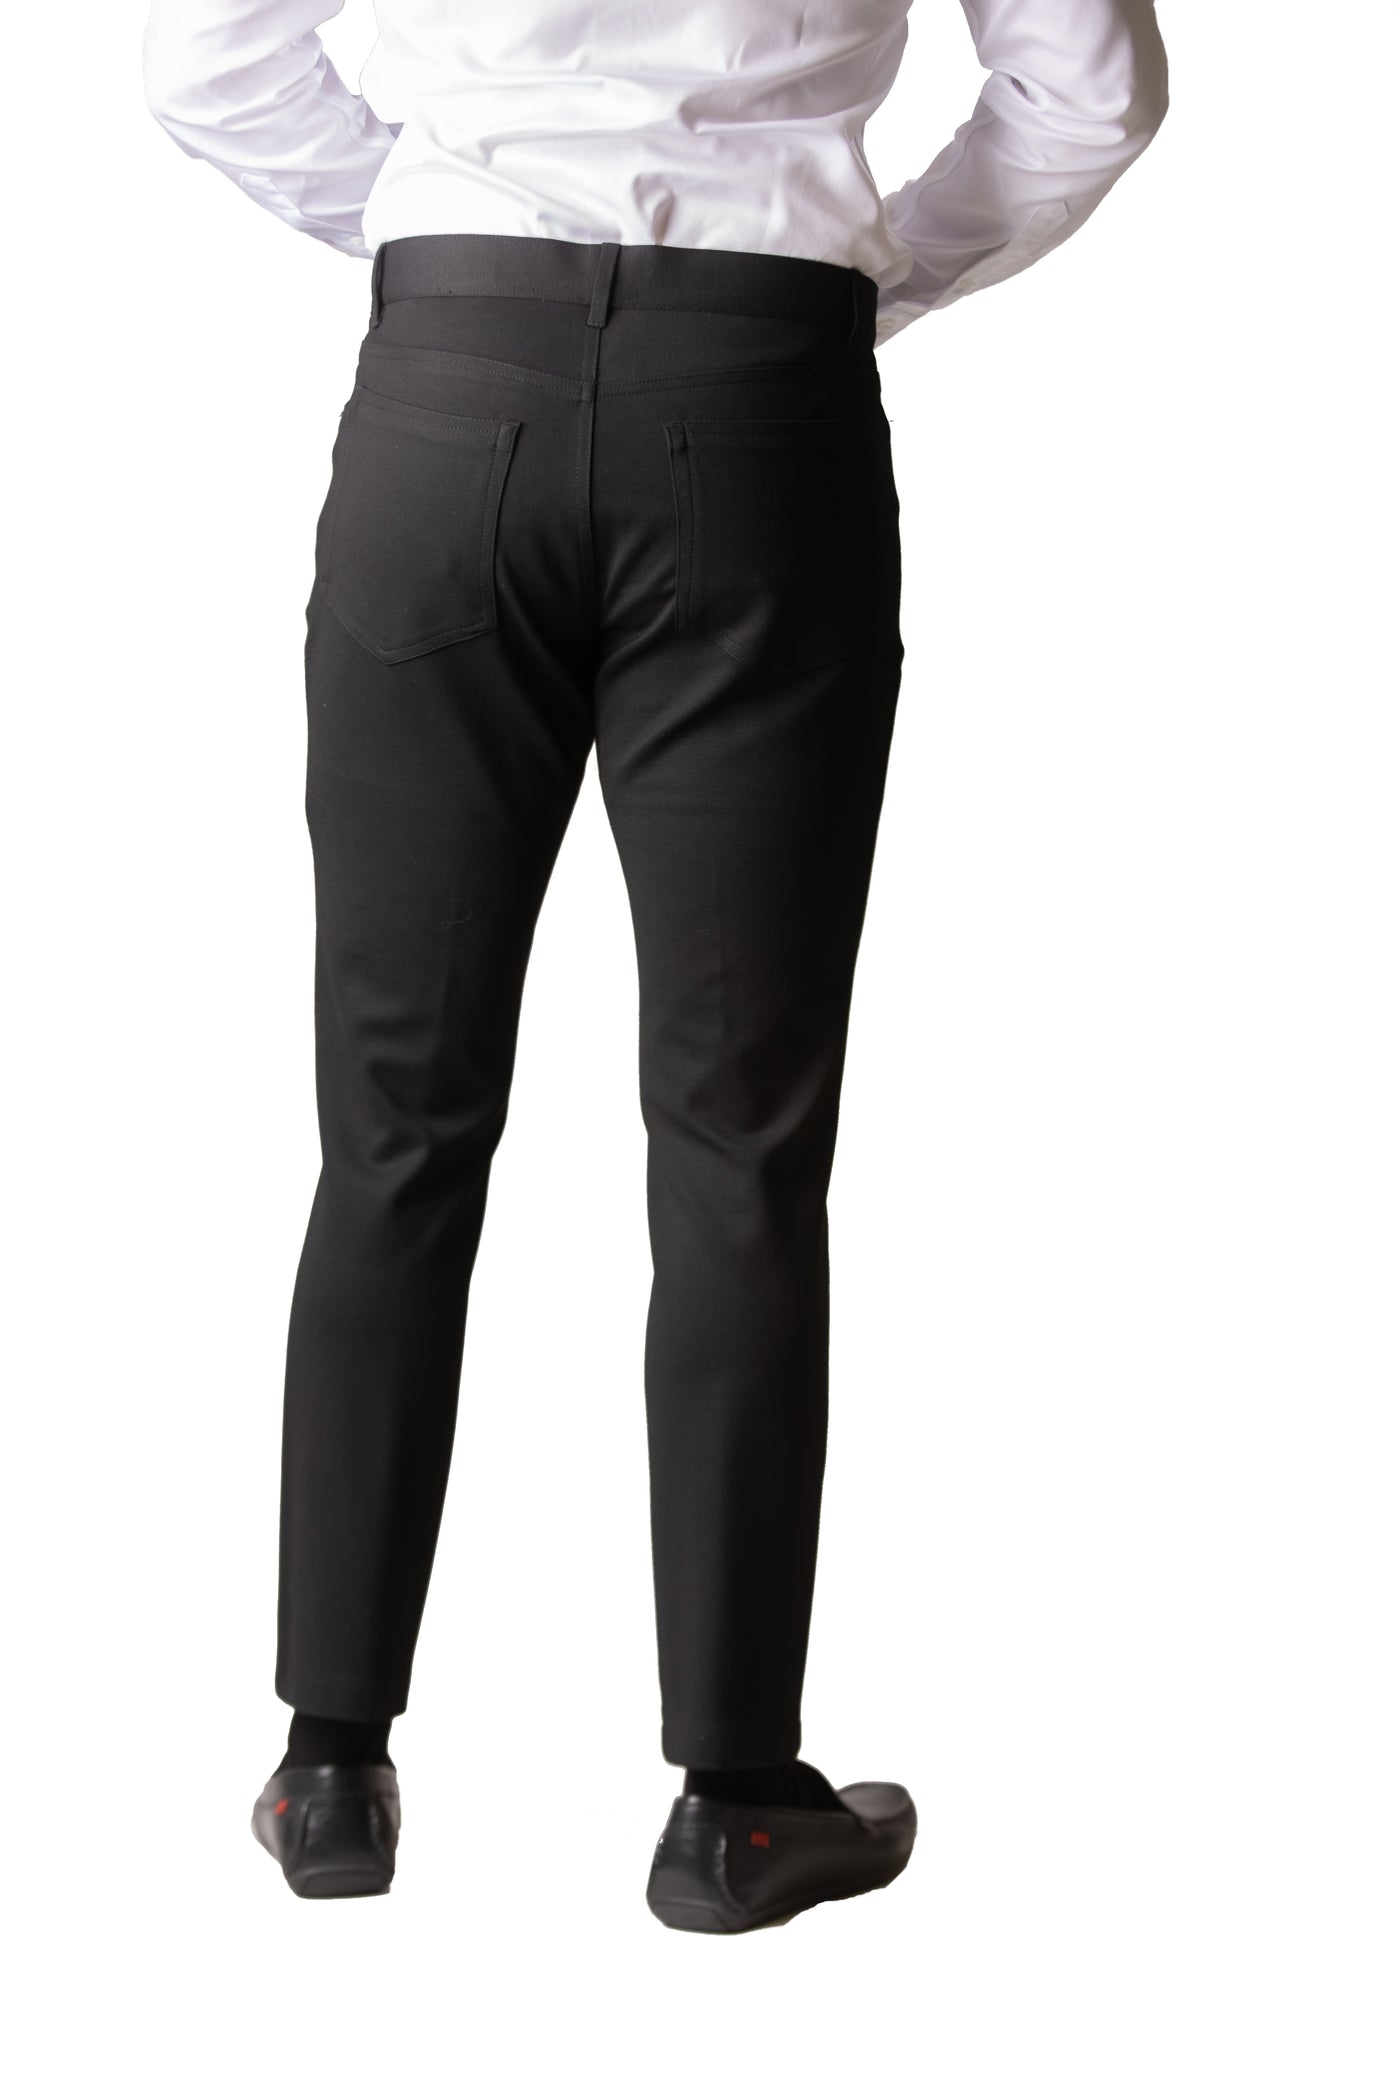 Boy's 5-Pocket Basic Stretch Pants - Black